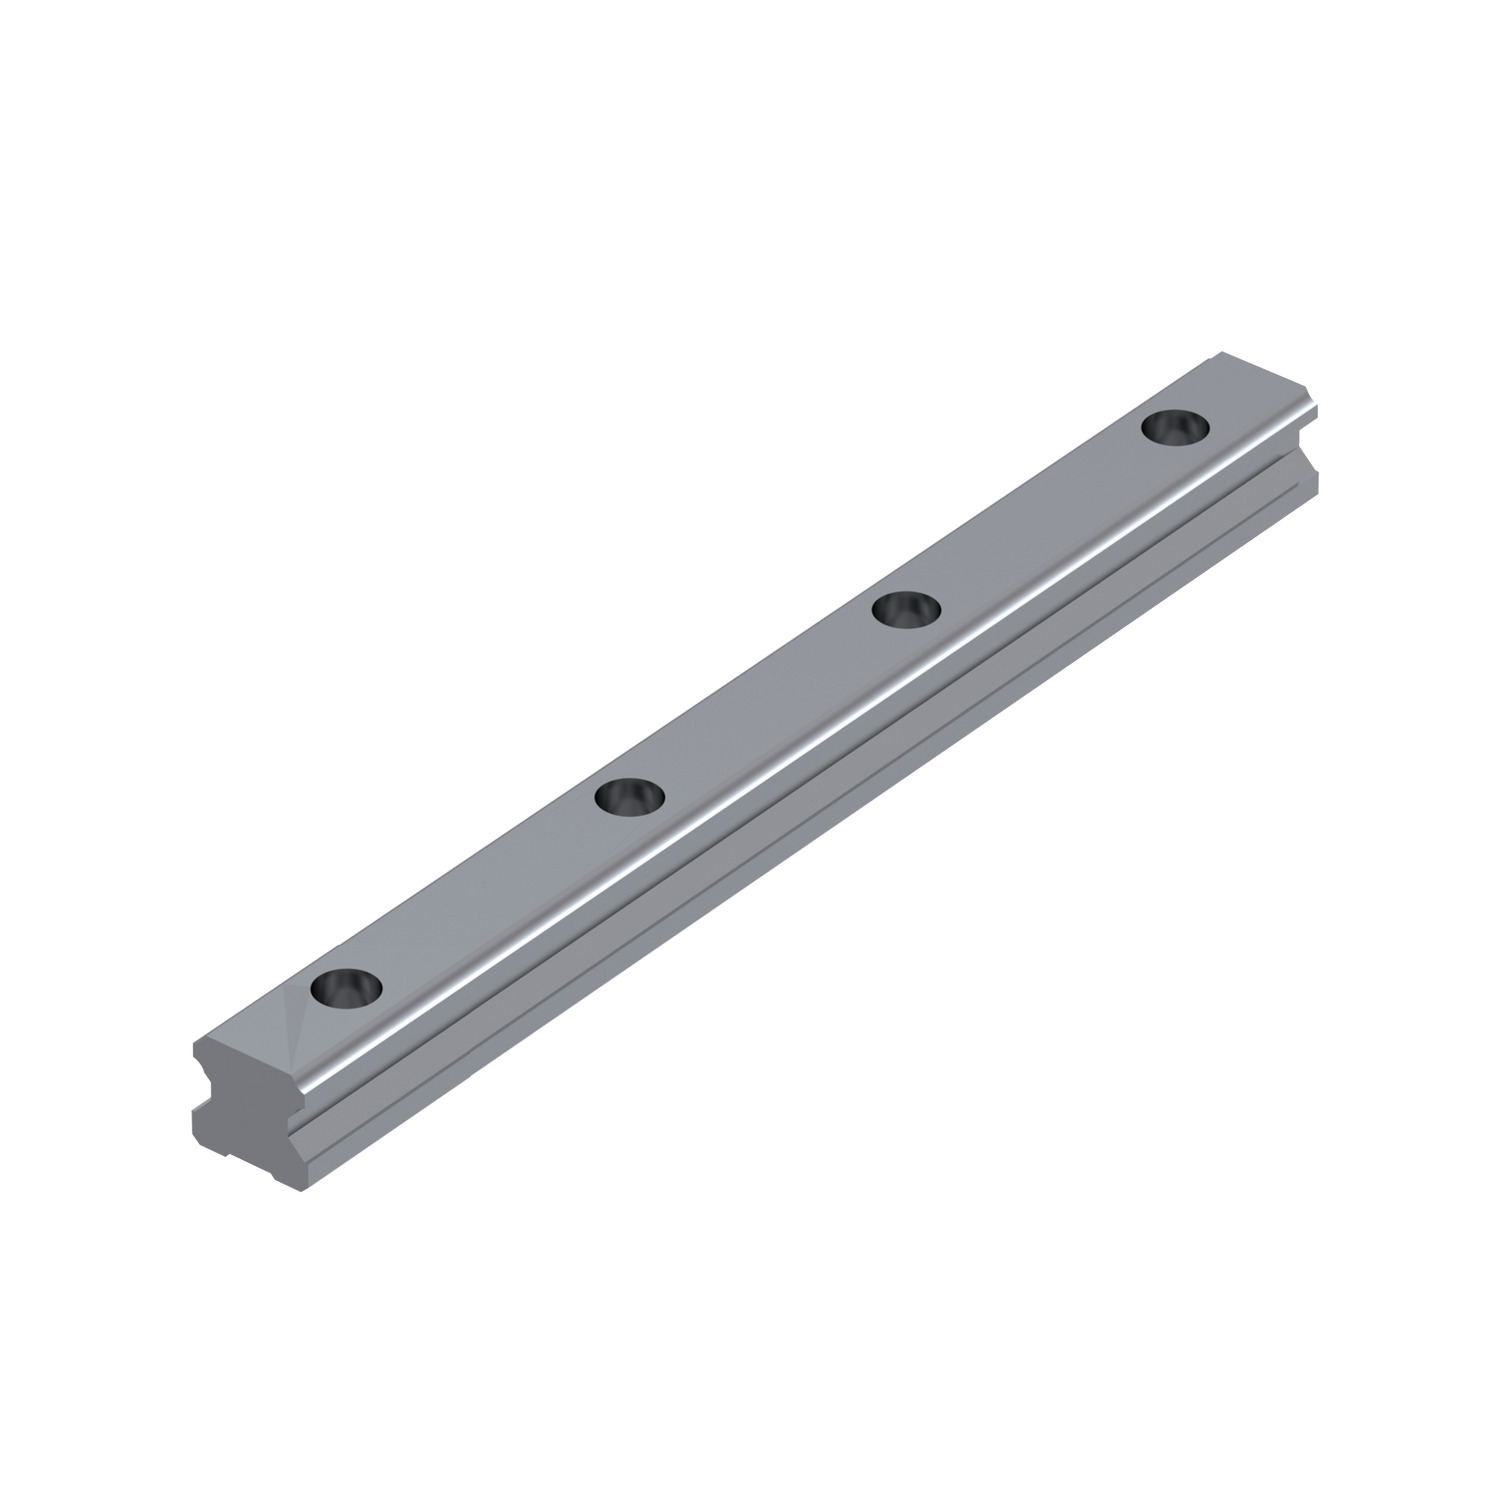 Product L1016.25, 25mm Linear Guide Rail standard / 